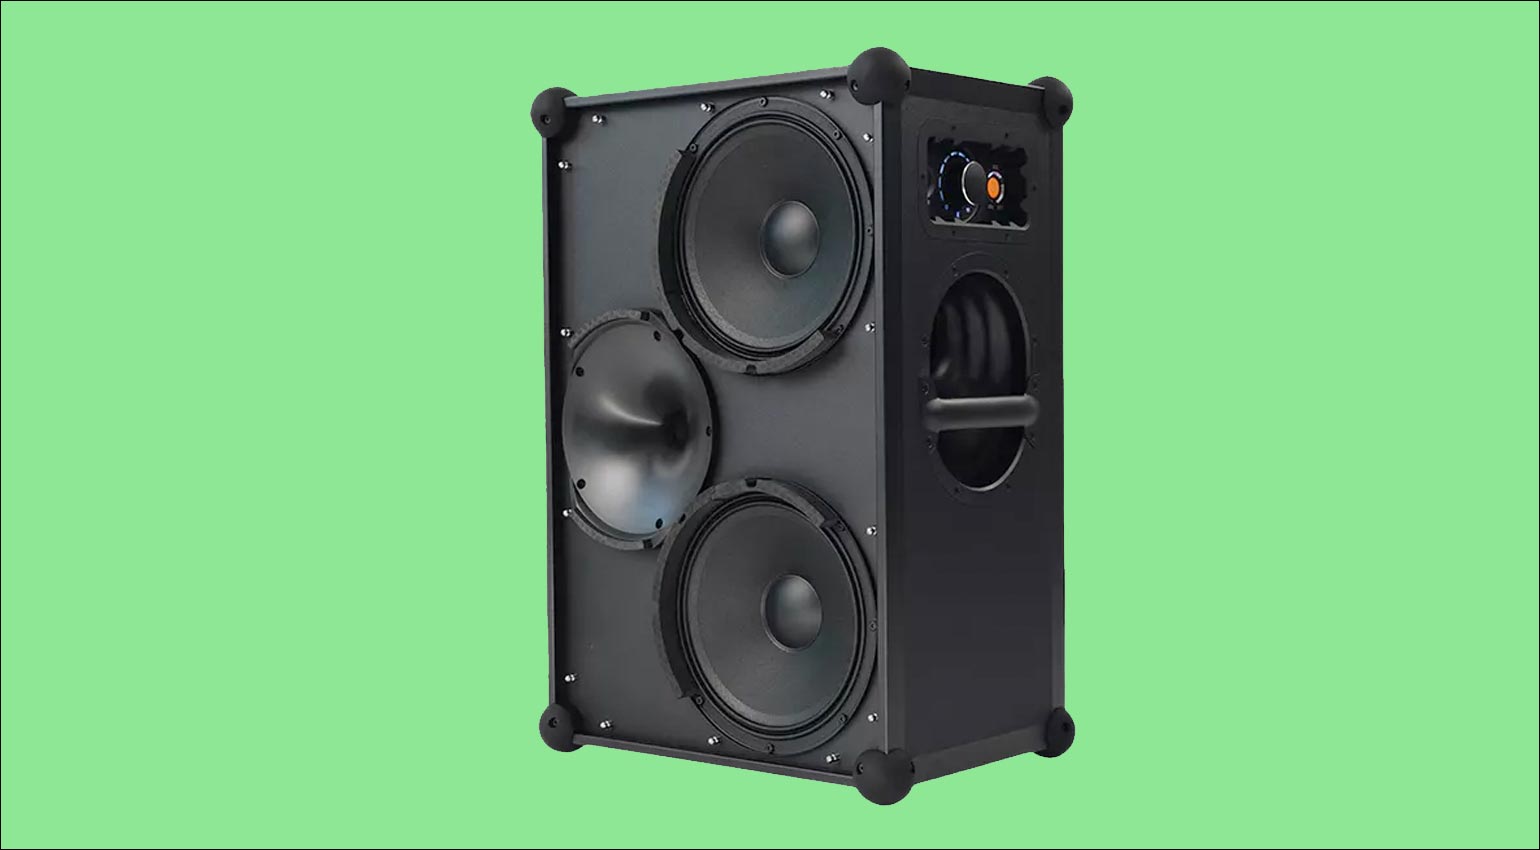 The Soundboks 4 is a truly explosive Bluetooth speaker 